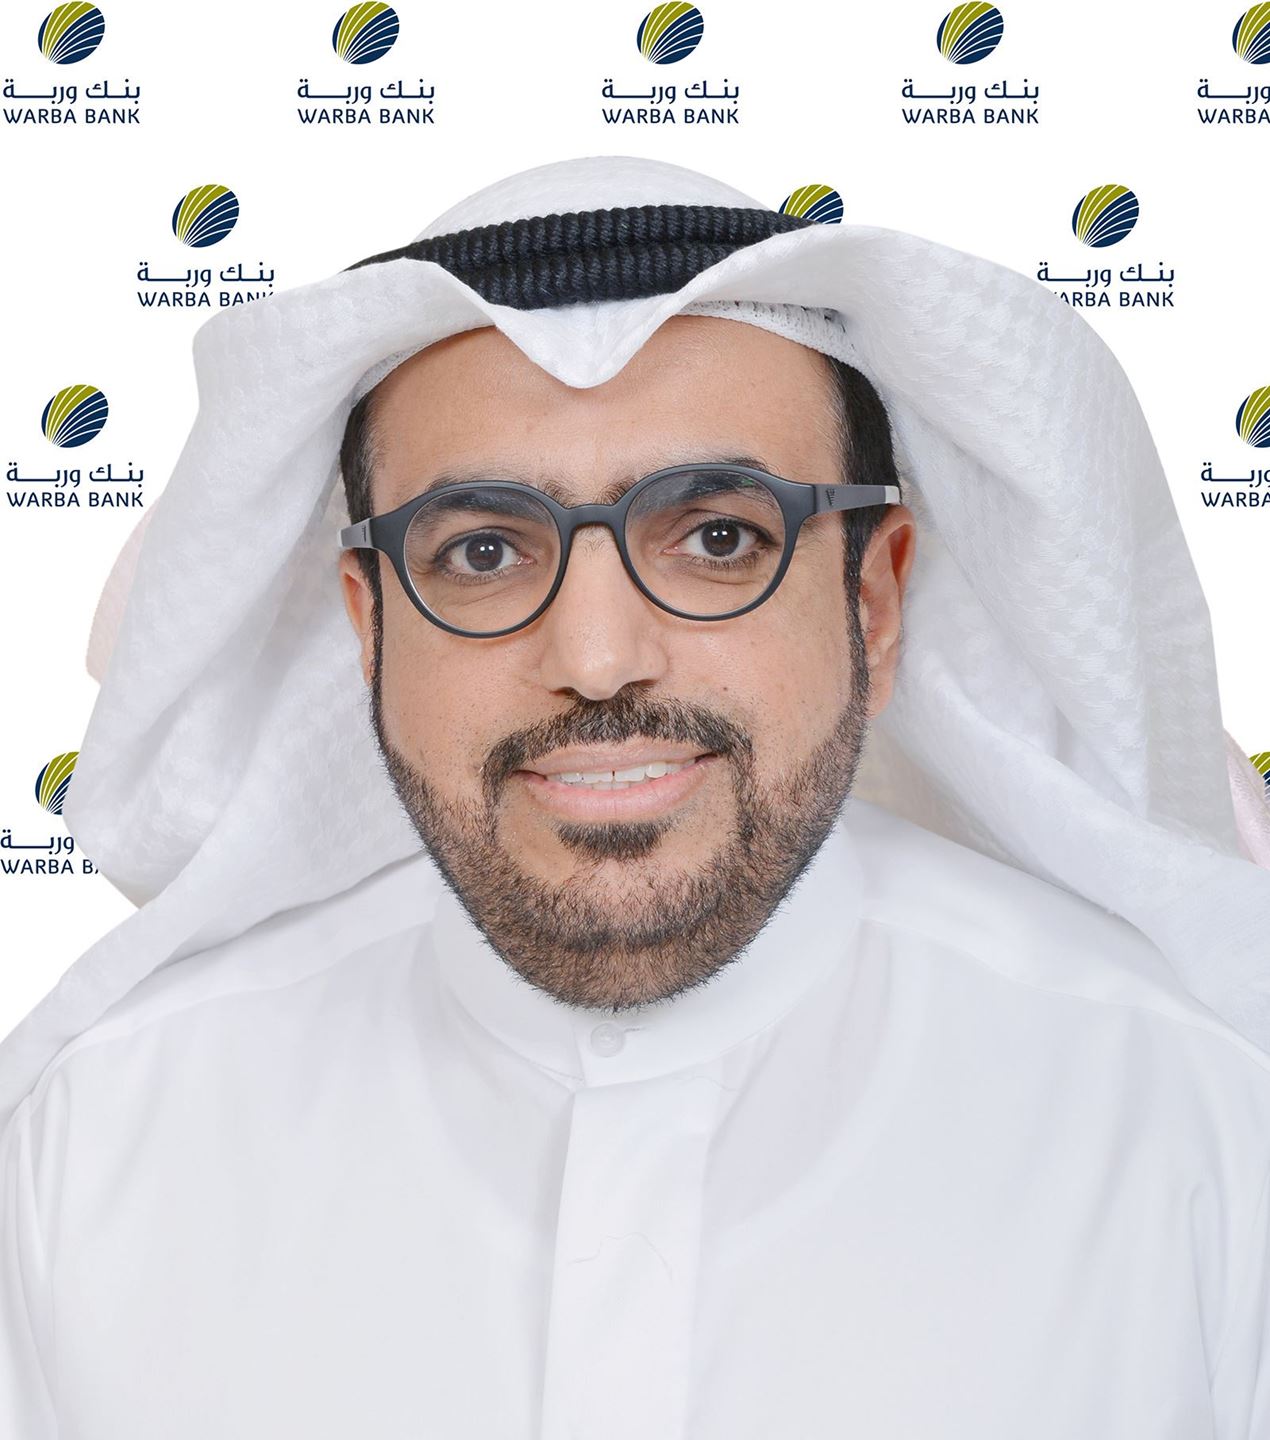 Mr. Shaheen Hamad Al Ghanem, Warba Bank’s CEO